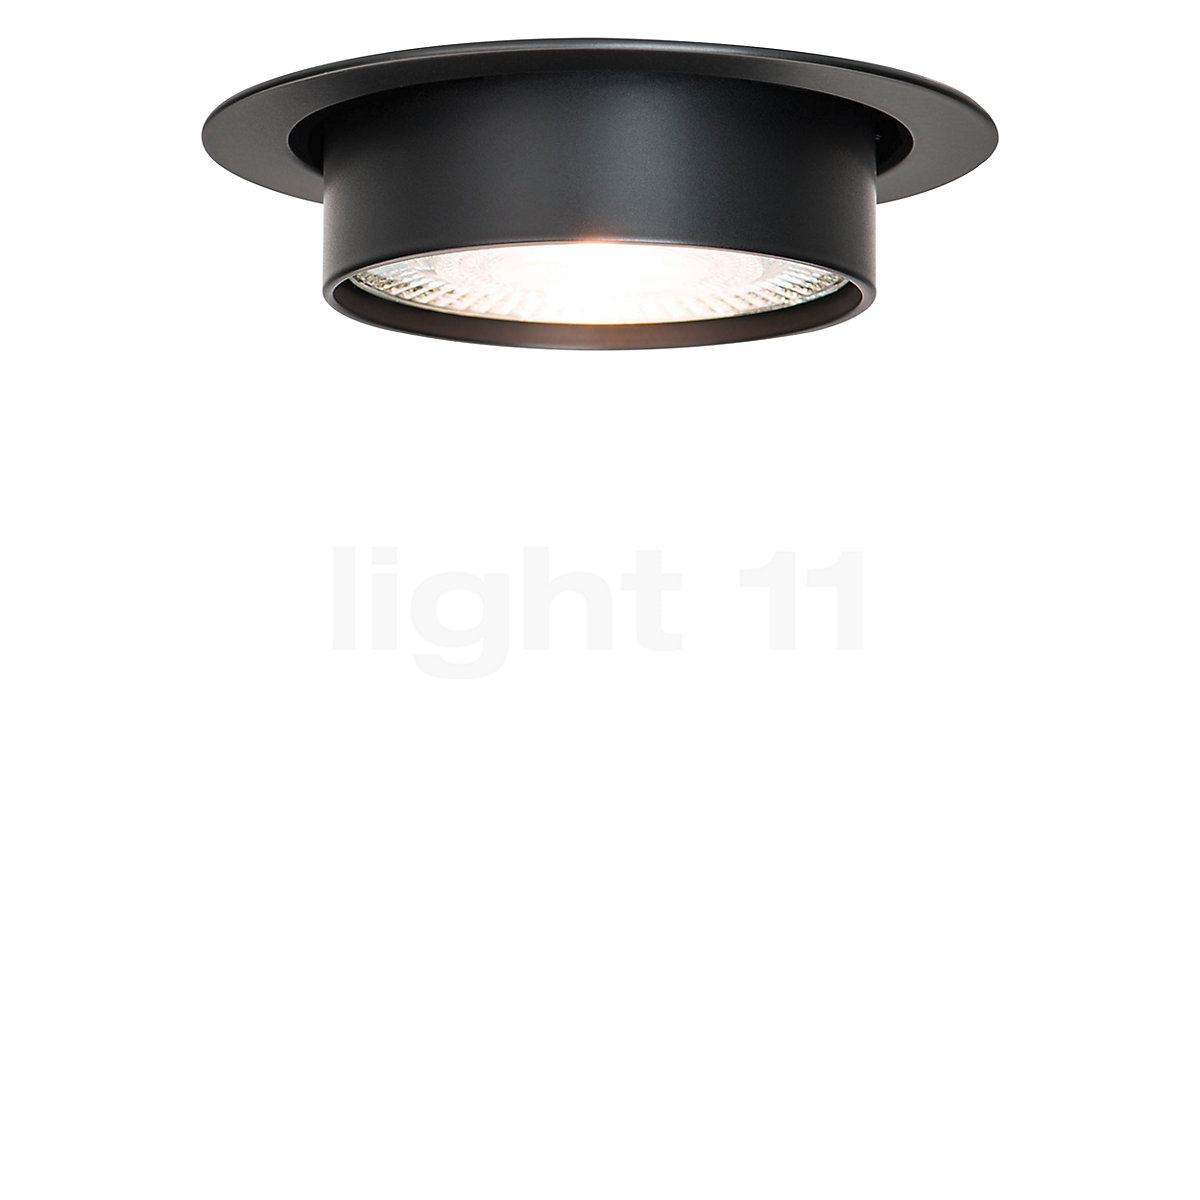 3 Ways Round Plate Ceiling Light Fitting Spot Lights Bulb LED Lighting NEW U1F1 